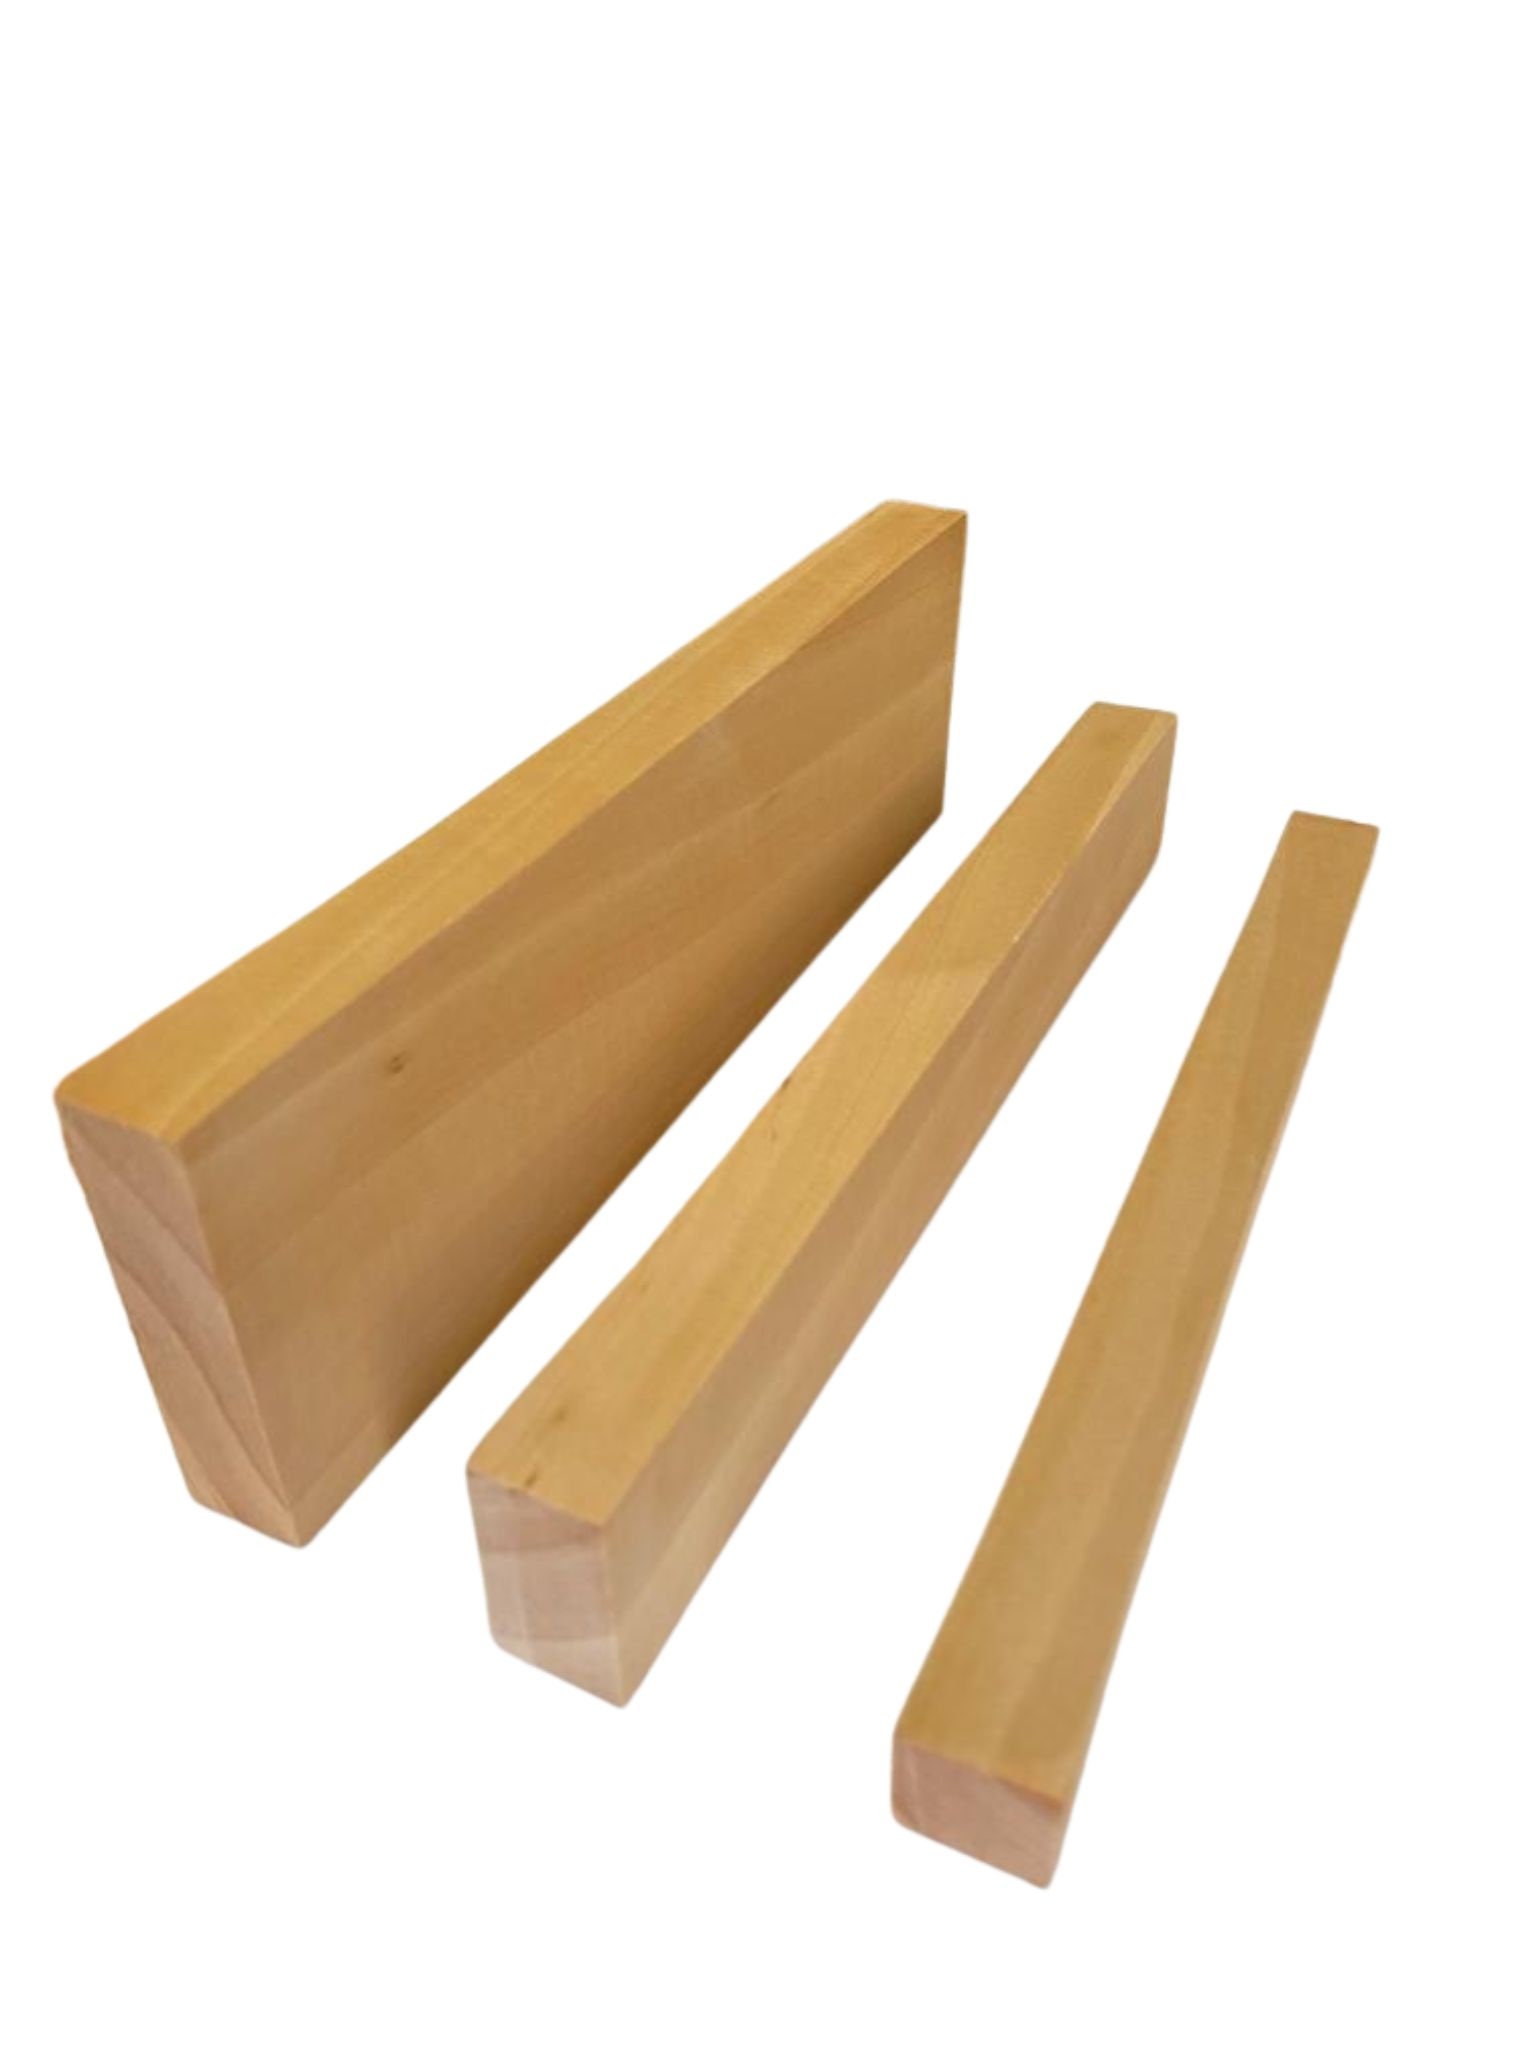 Basswood Wood Slat Lumber Cut to Size Scrubbed Lumber and - Etsy